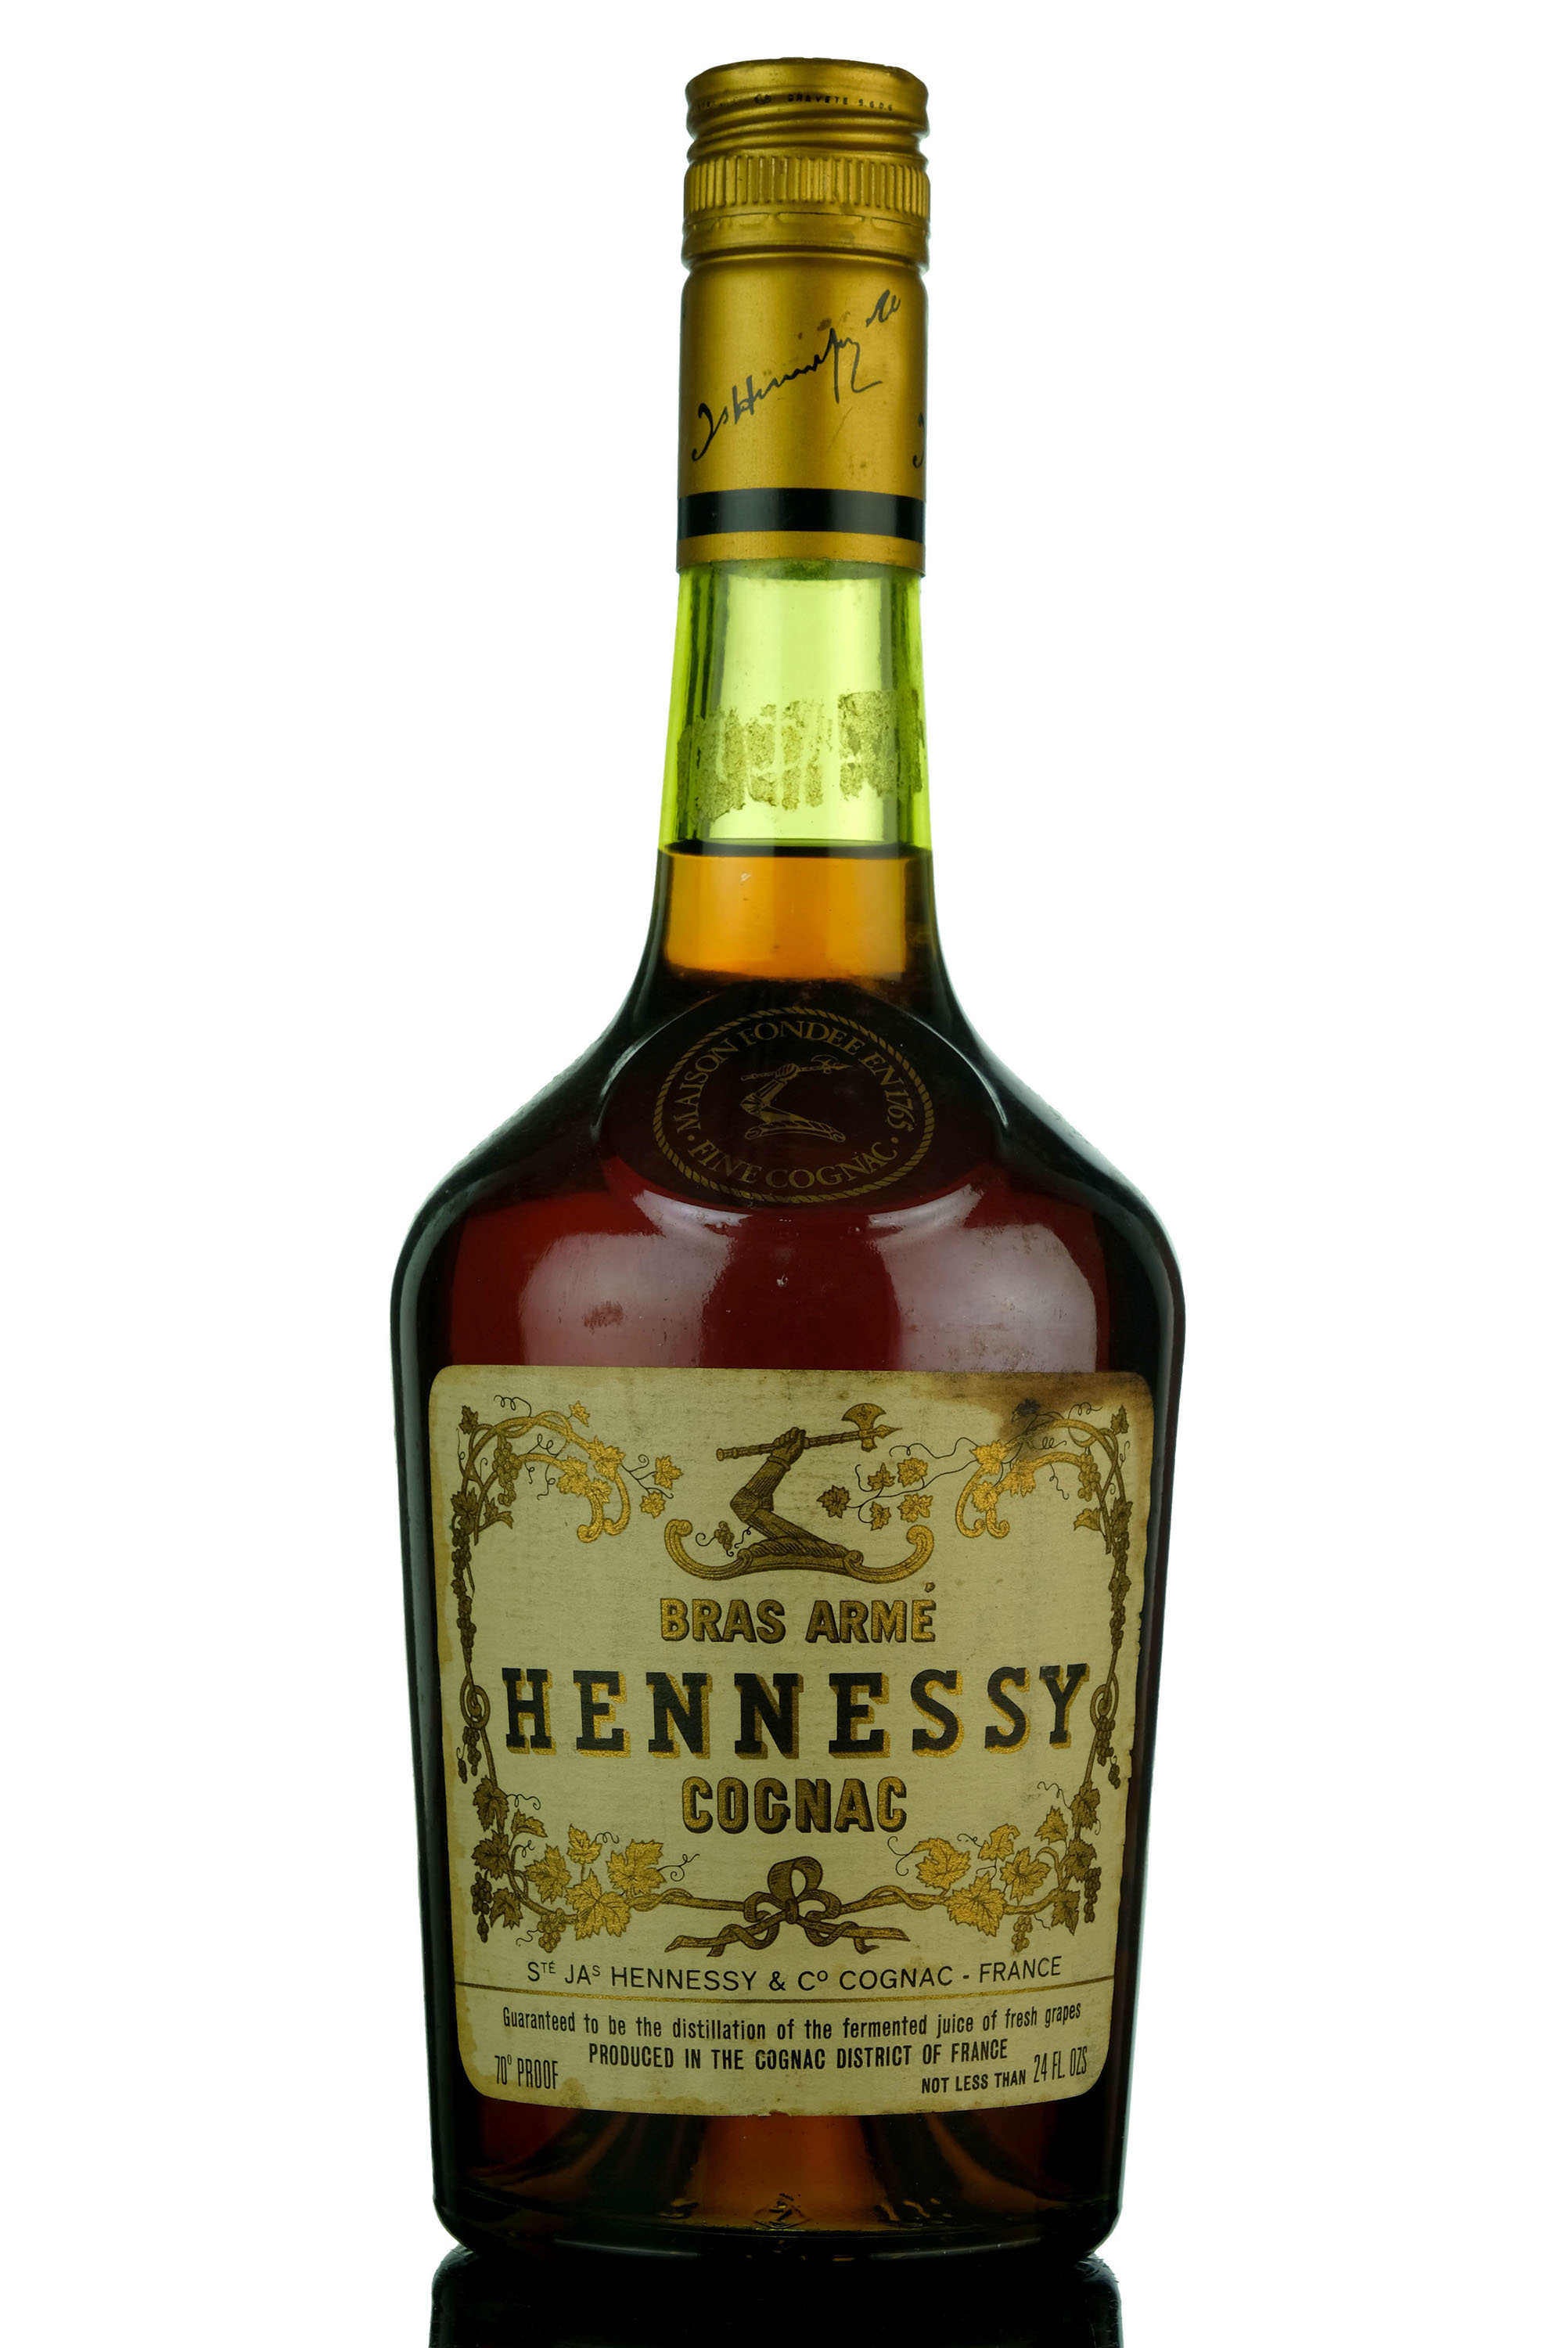 Hennessy Bras Arme Cognac - 1970s